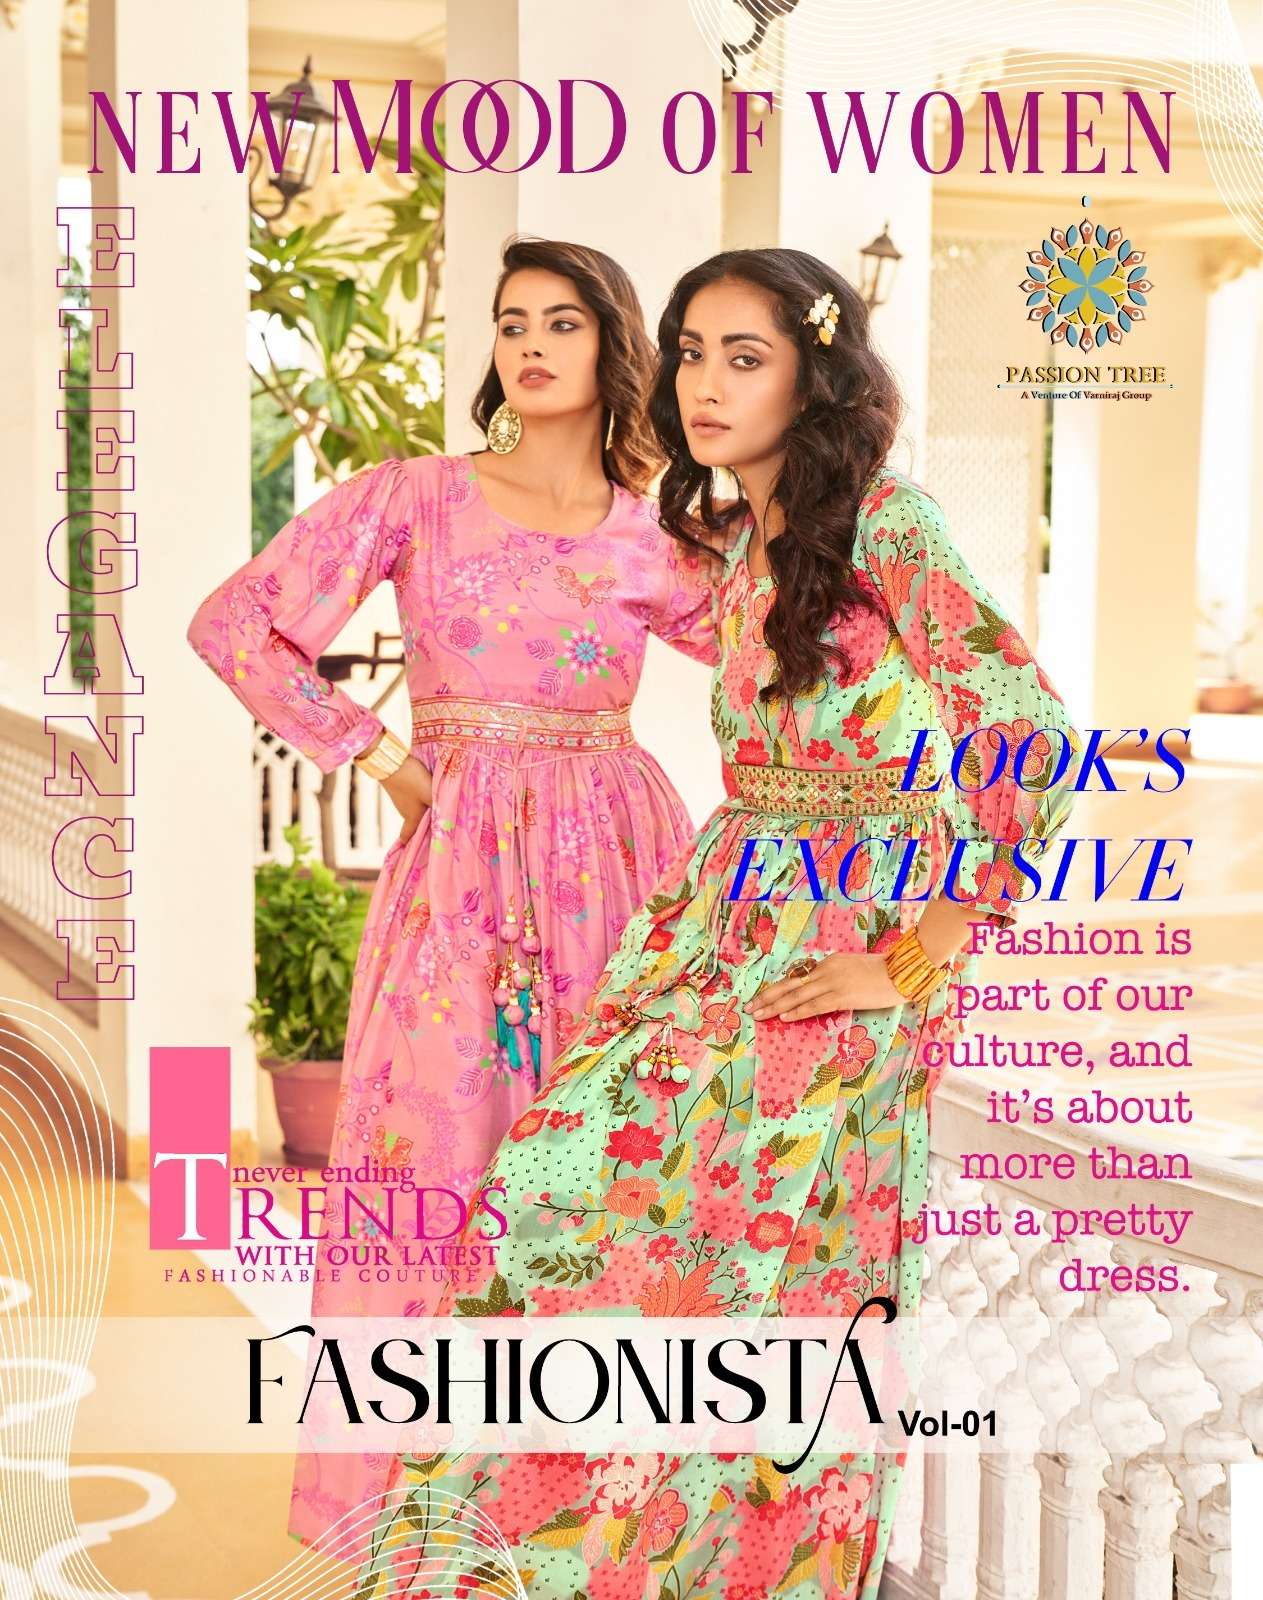 passion tree present fashionista vol 1 fancy aliya style fancy stitch gown online supplier